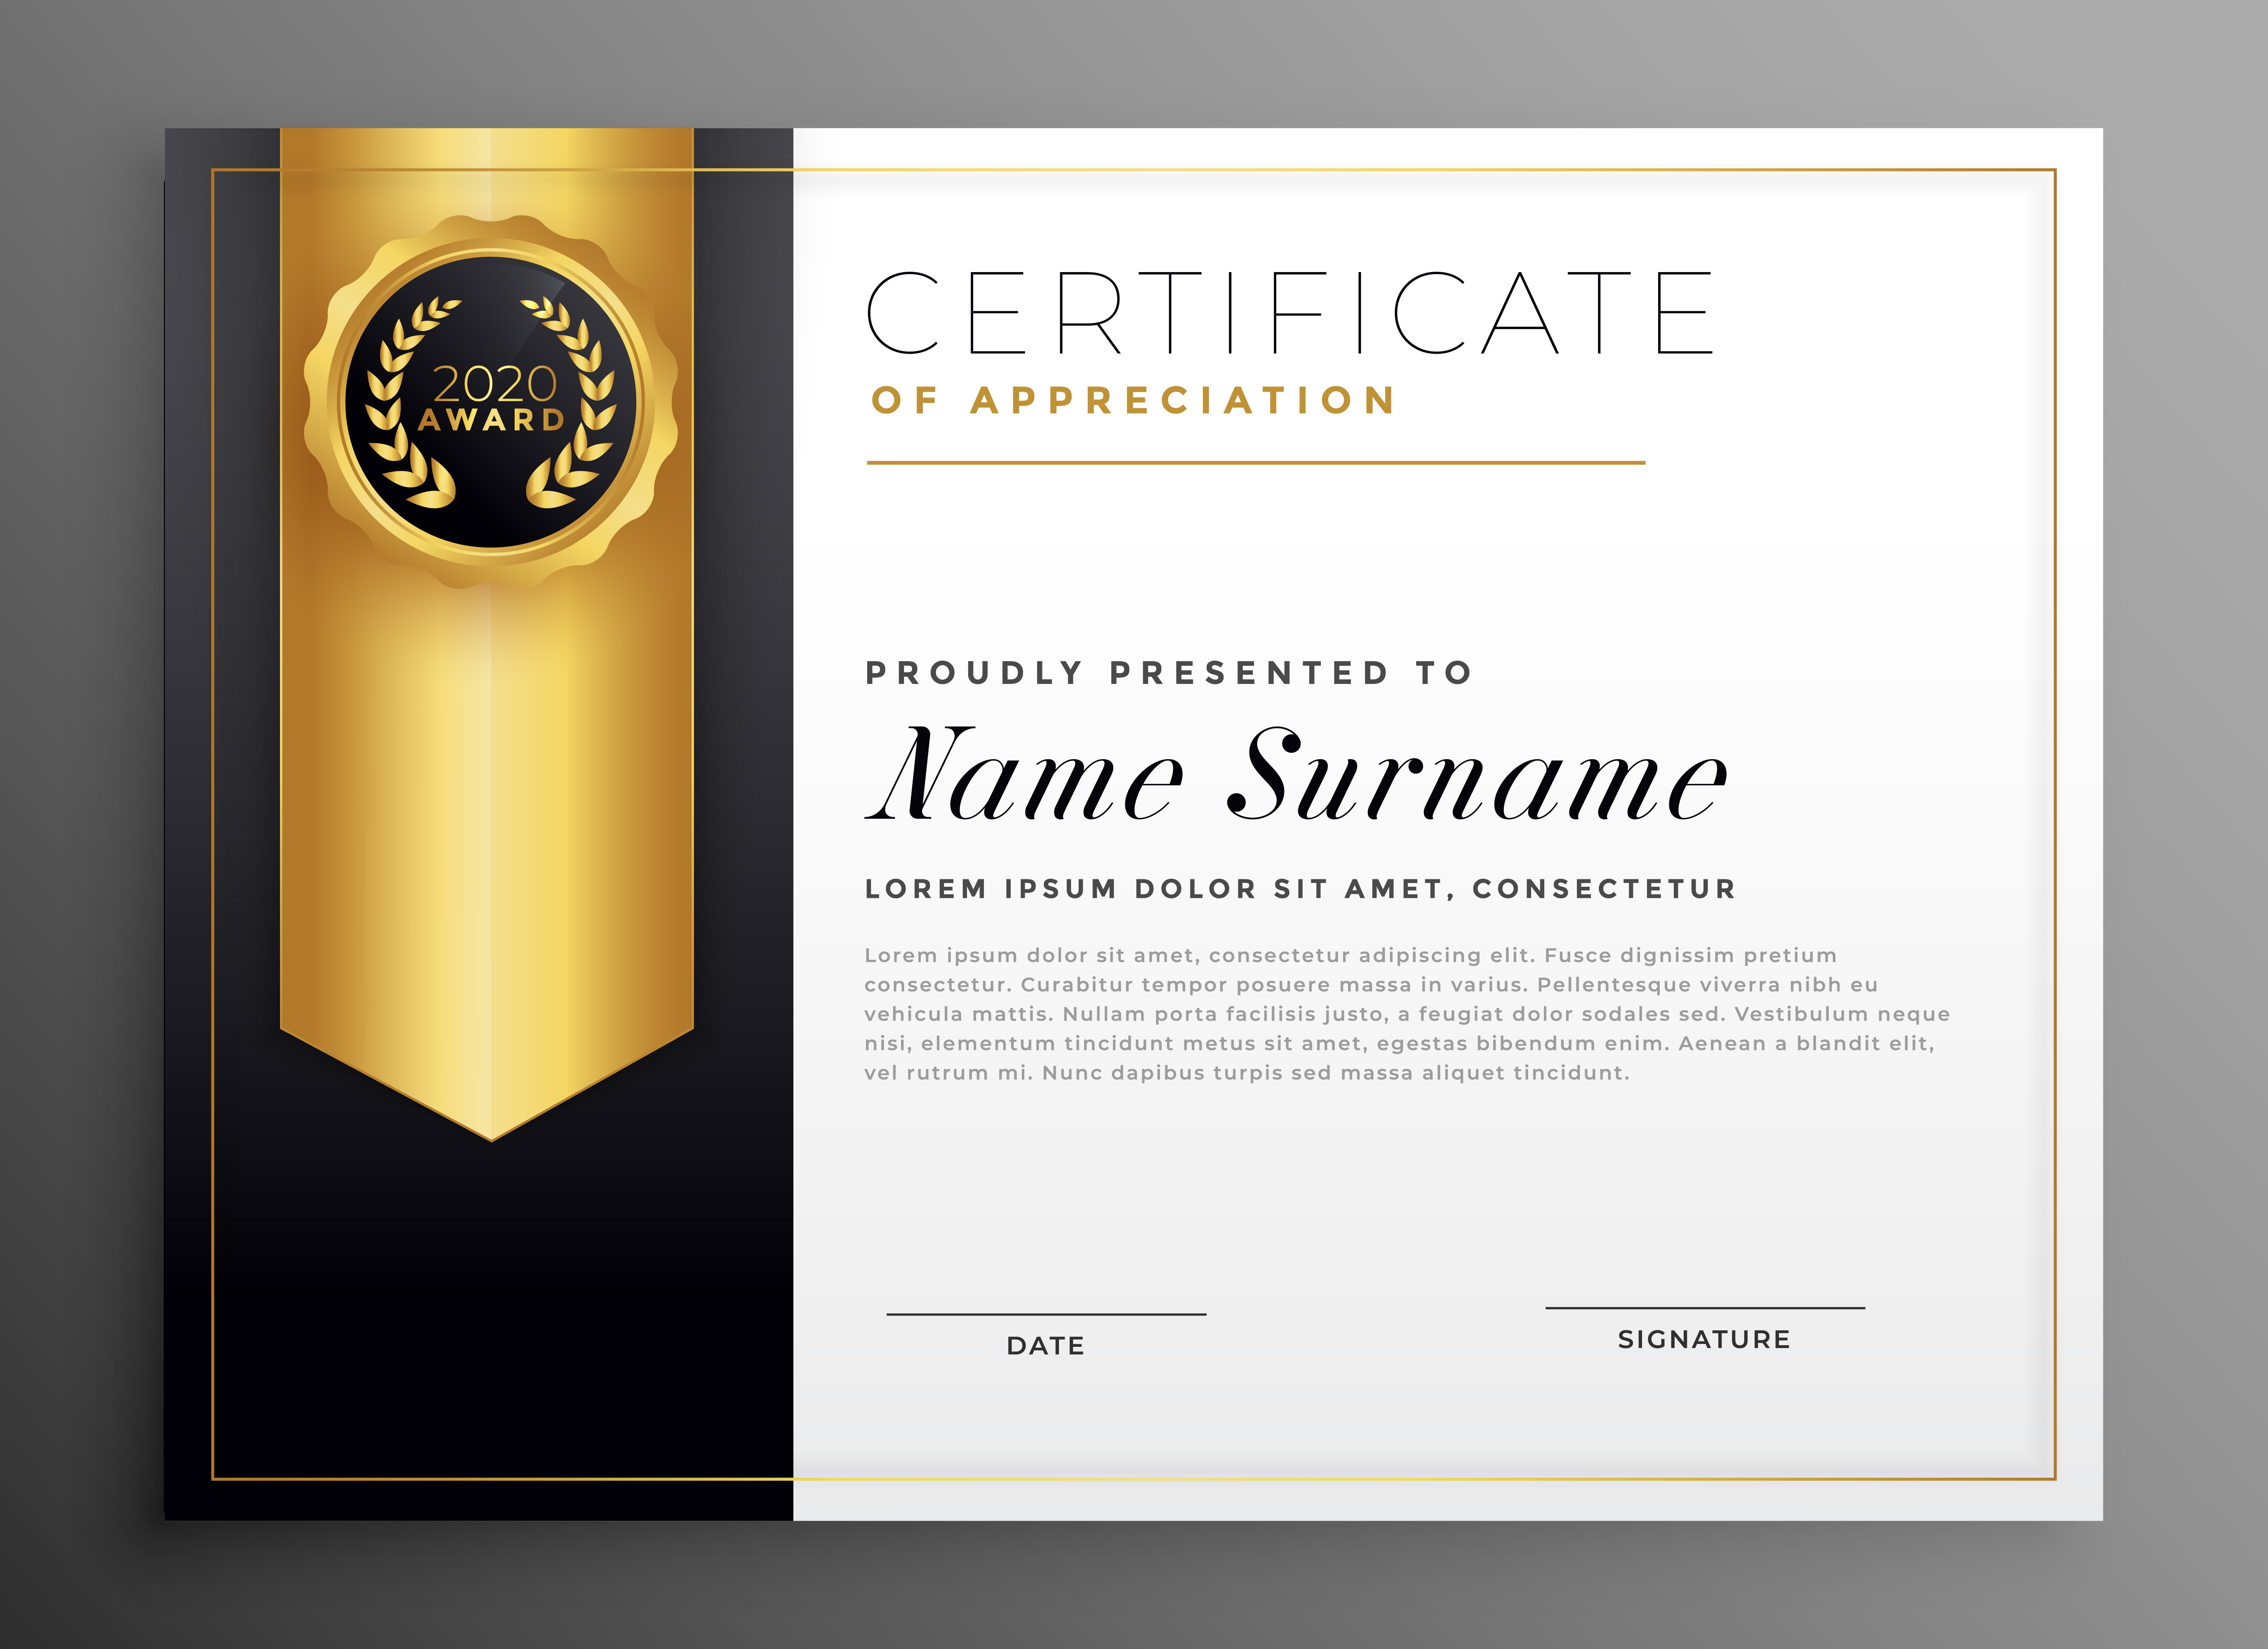 Download golden company certificate design template - Download Free Vector Art, Stock Graphics & Images